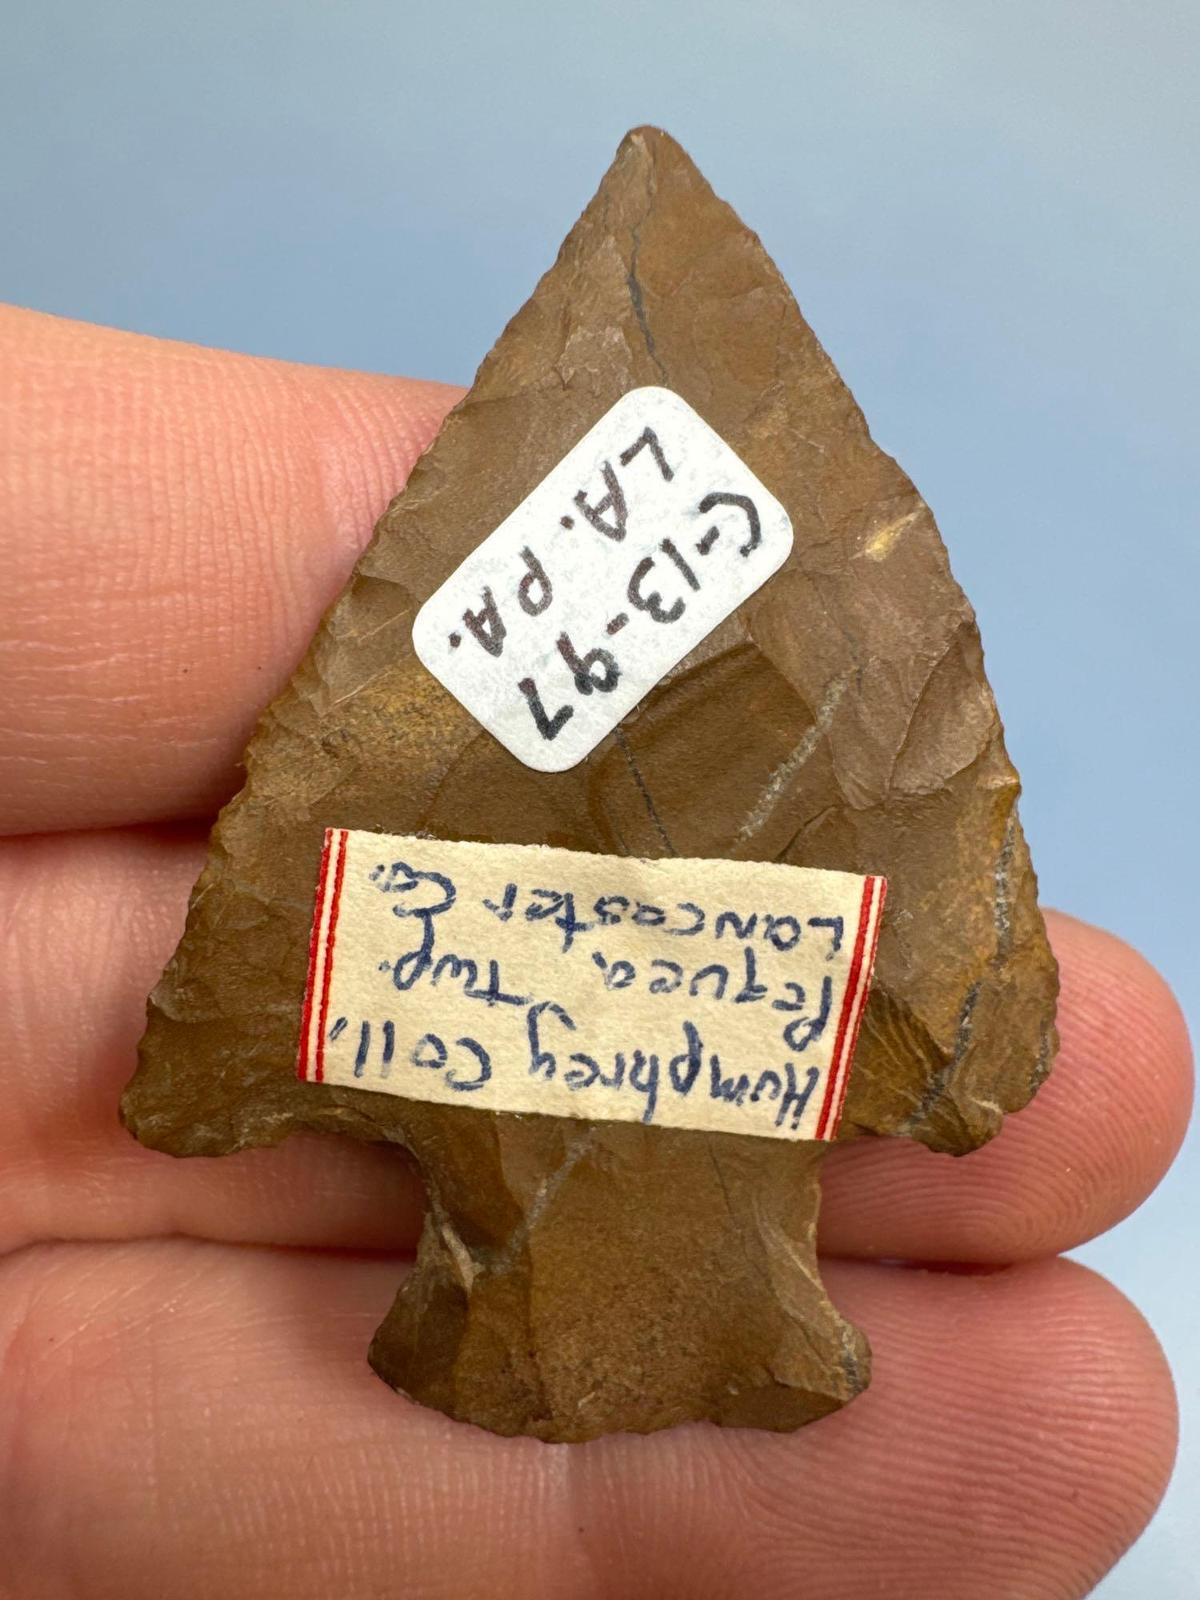 FINE 2" Jasper Perkiomen Point, Found in Pequea Twp., Lancaster Co., PA, Ex: Humphrey Collection